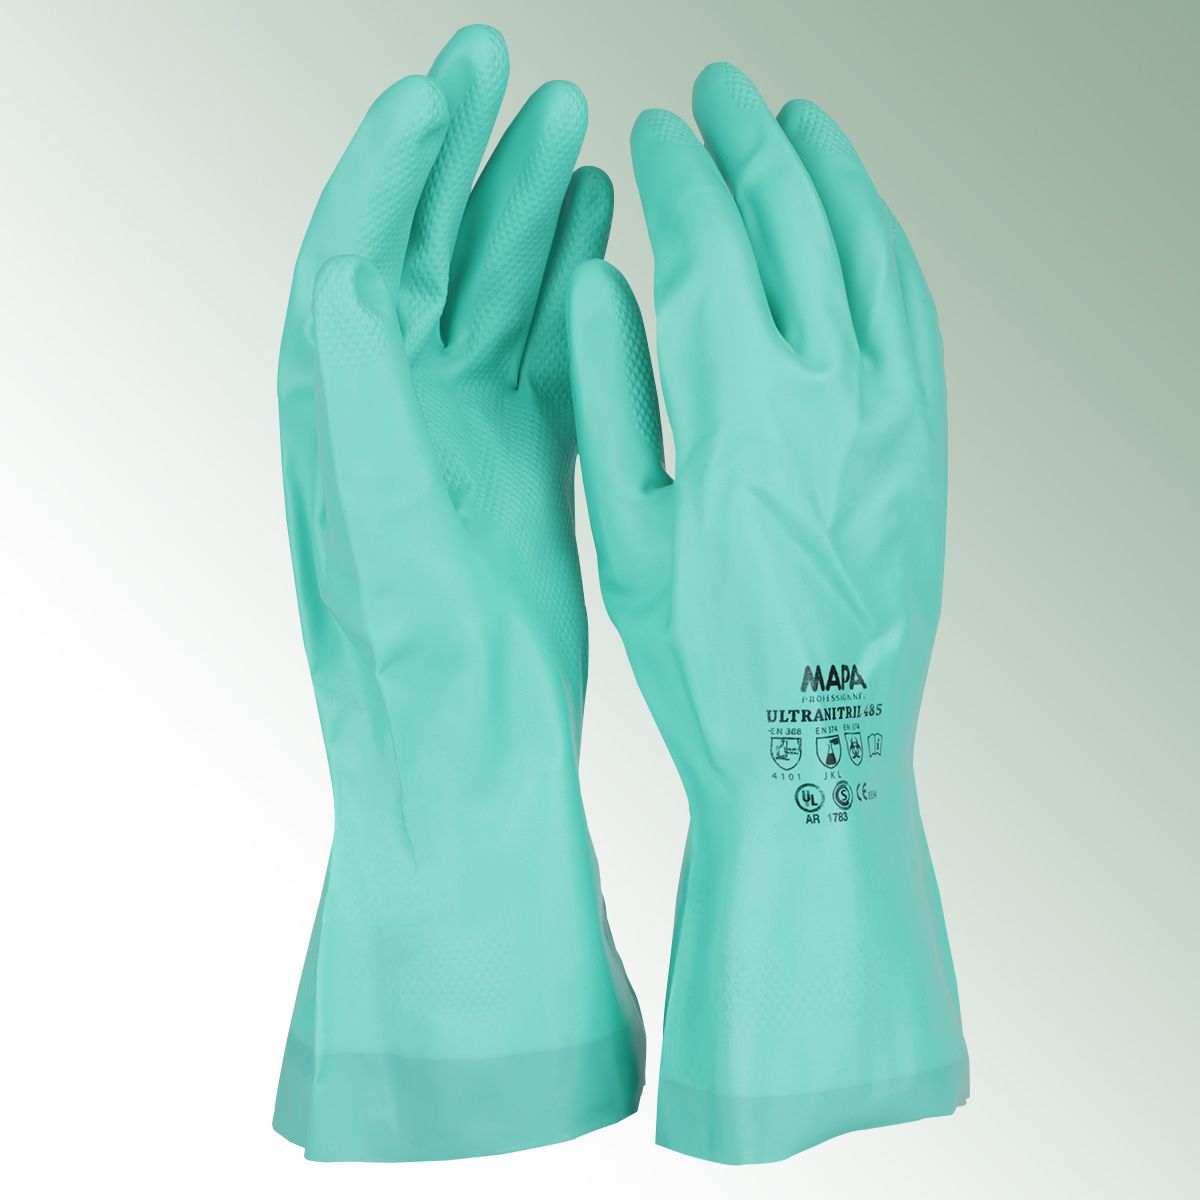 Gloves - Chemical Protective Ultranil 485 - size 9